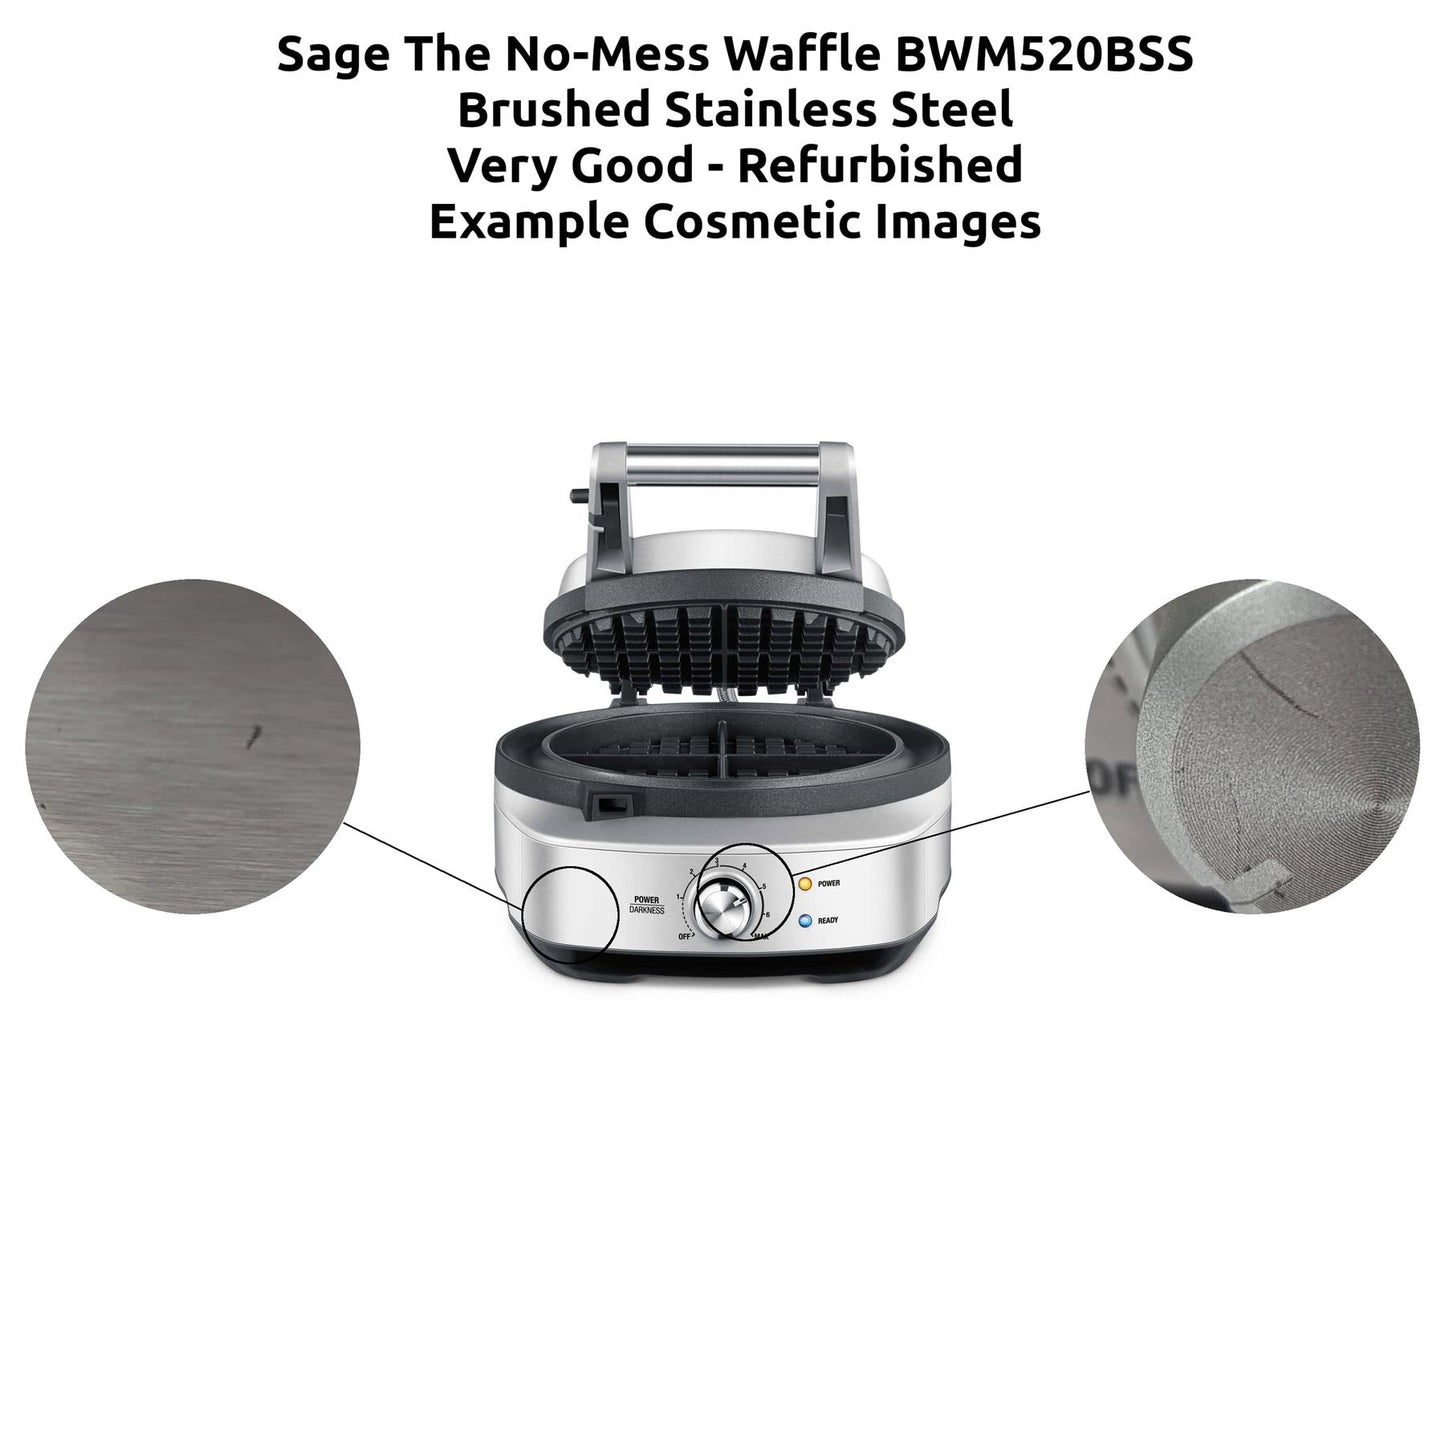 Sage The No-Mess Waffle BWM520 Waffle Maker